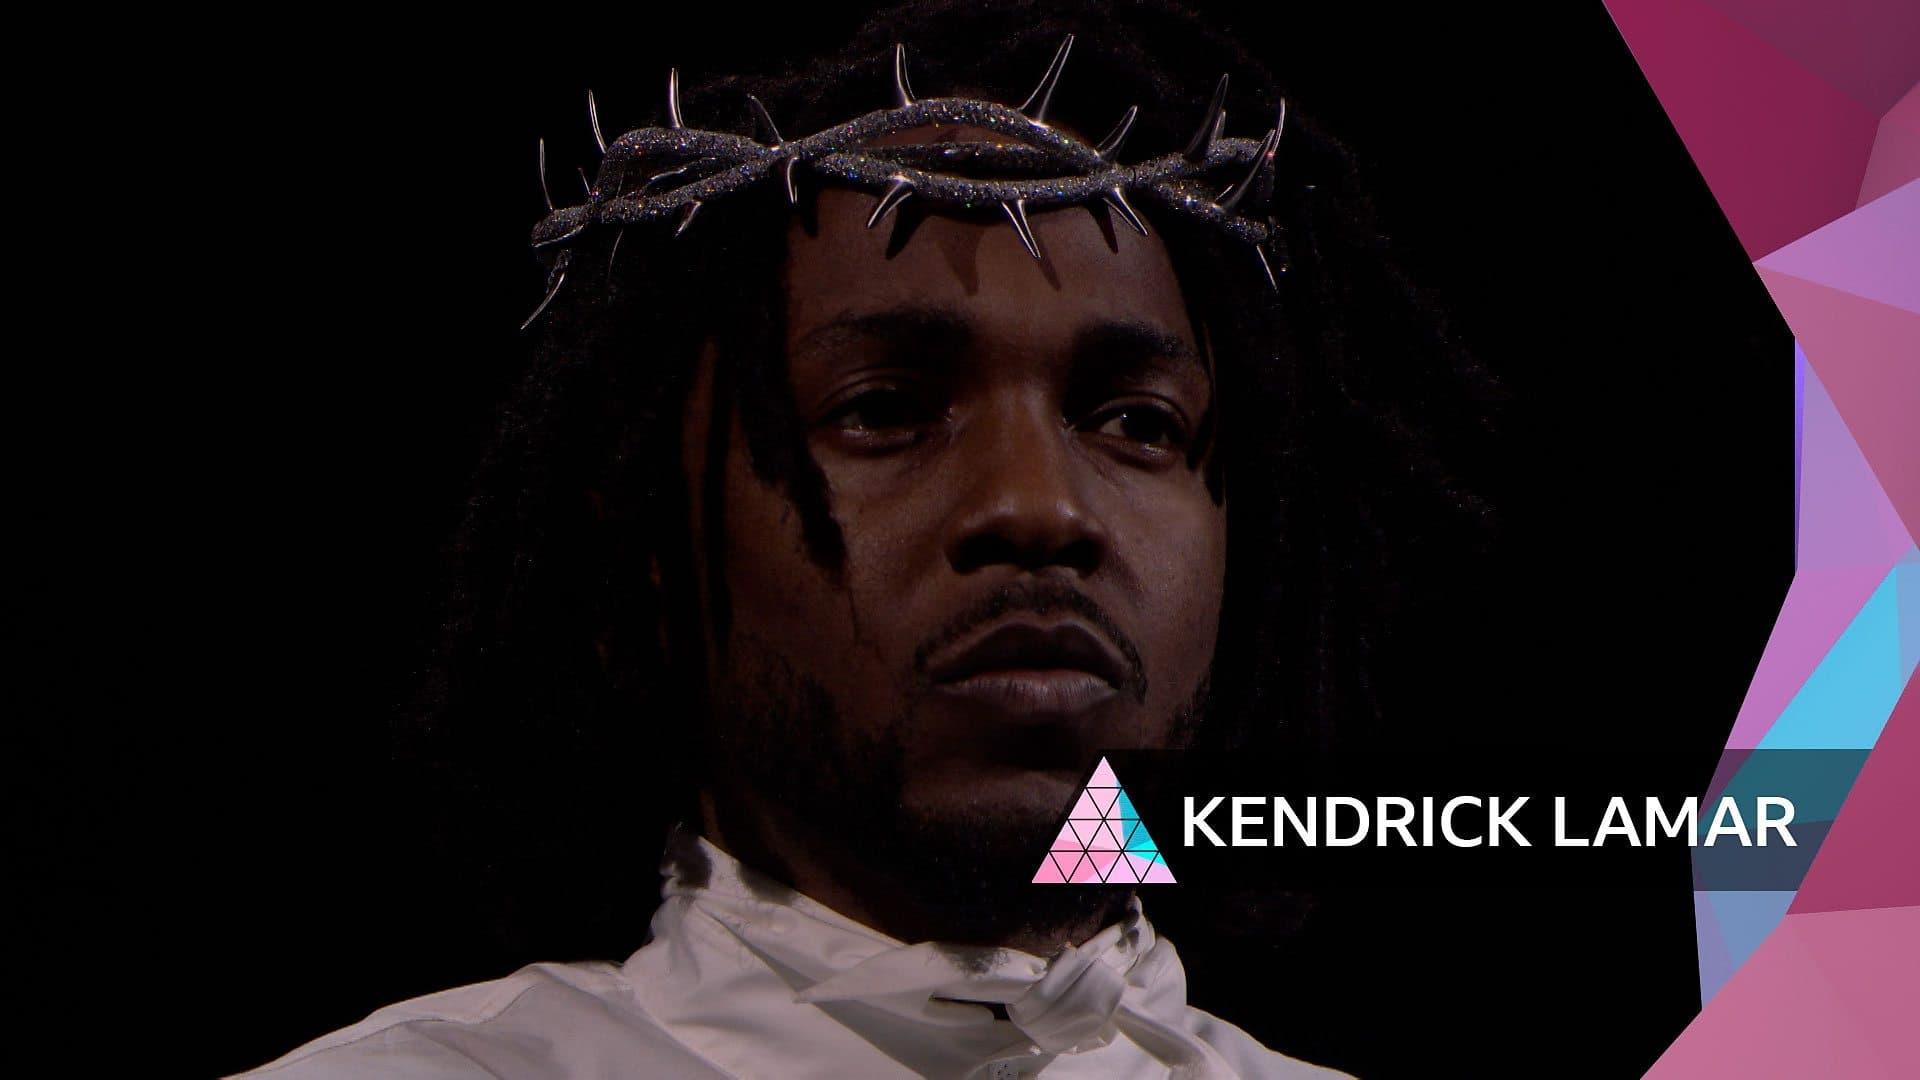 Kendrick Lamar at Glastonbury 2022 backdrop